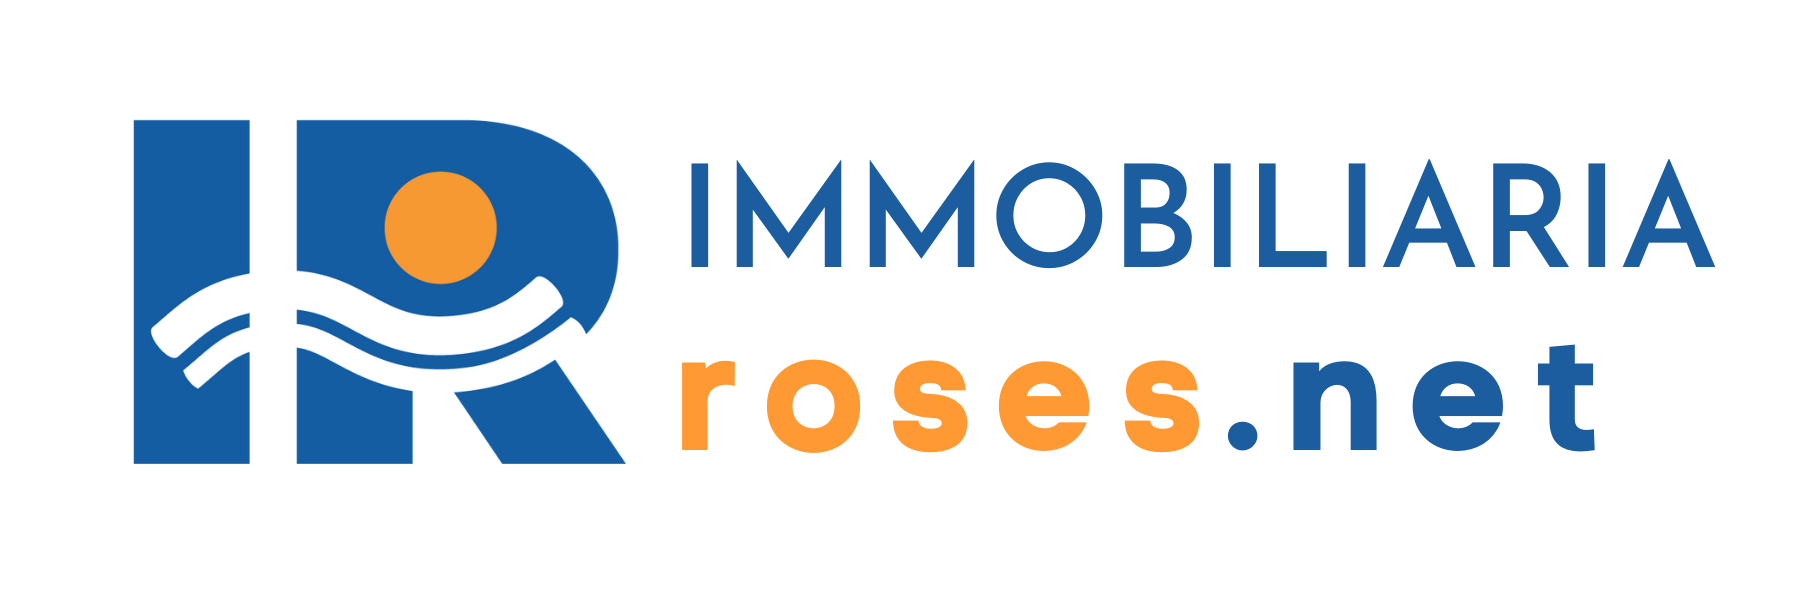 Inmobiliaria Immo Roses.net - Administración fincas Costa Brava